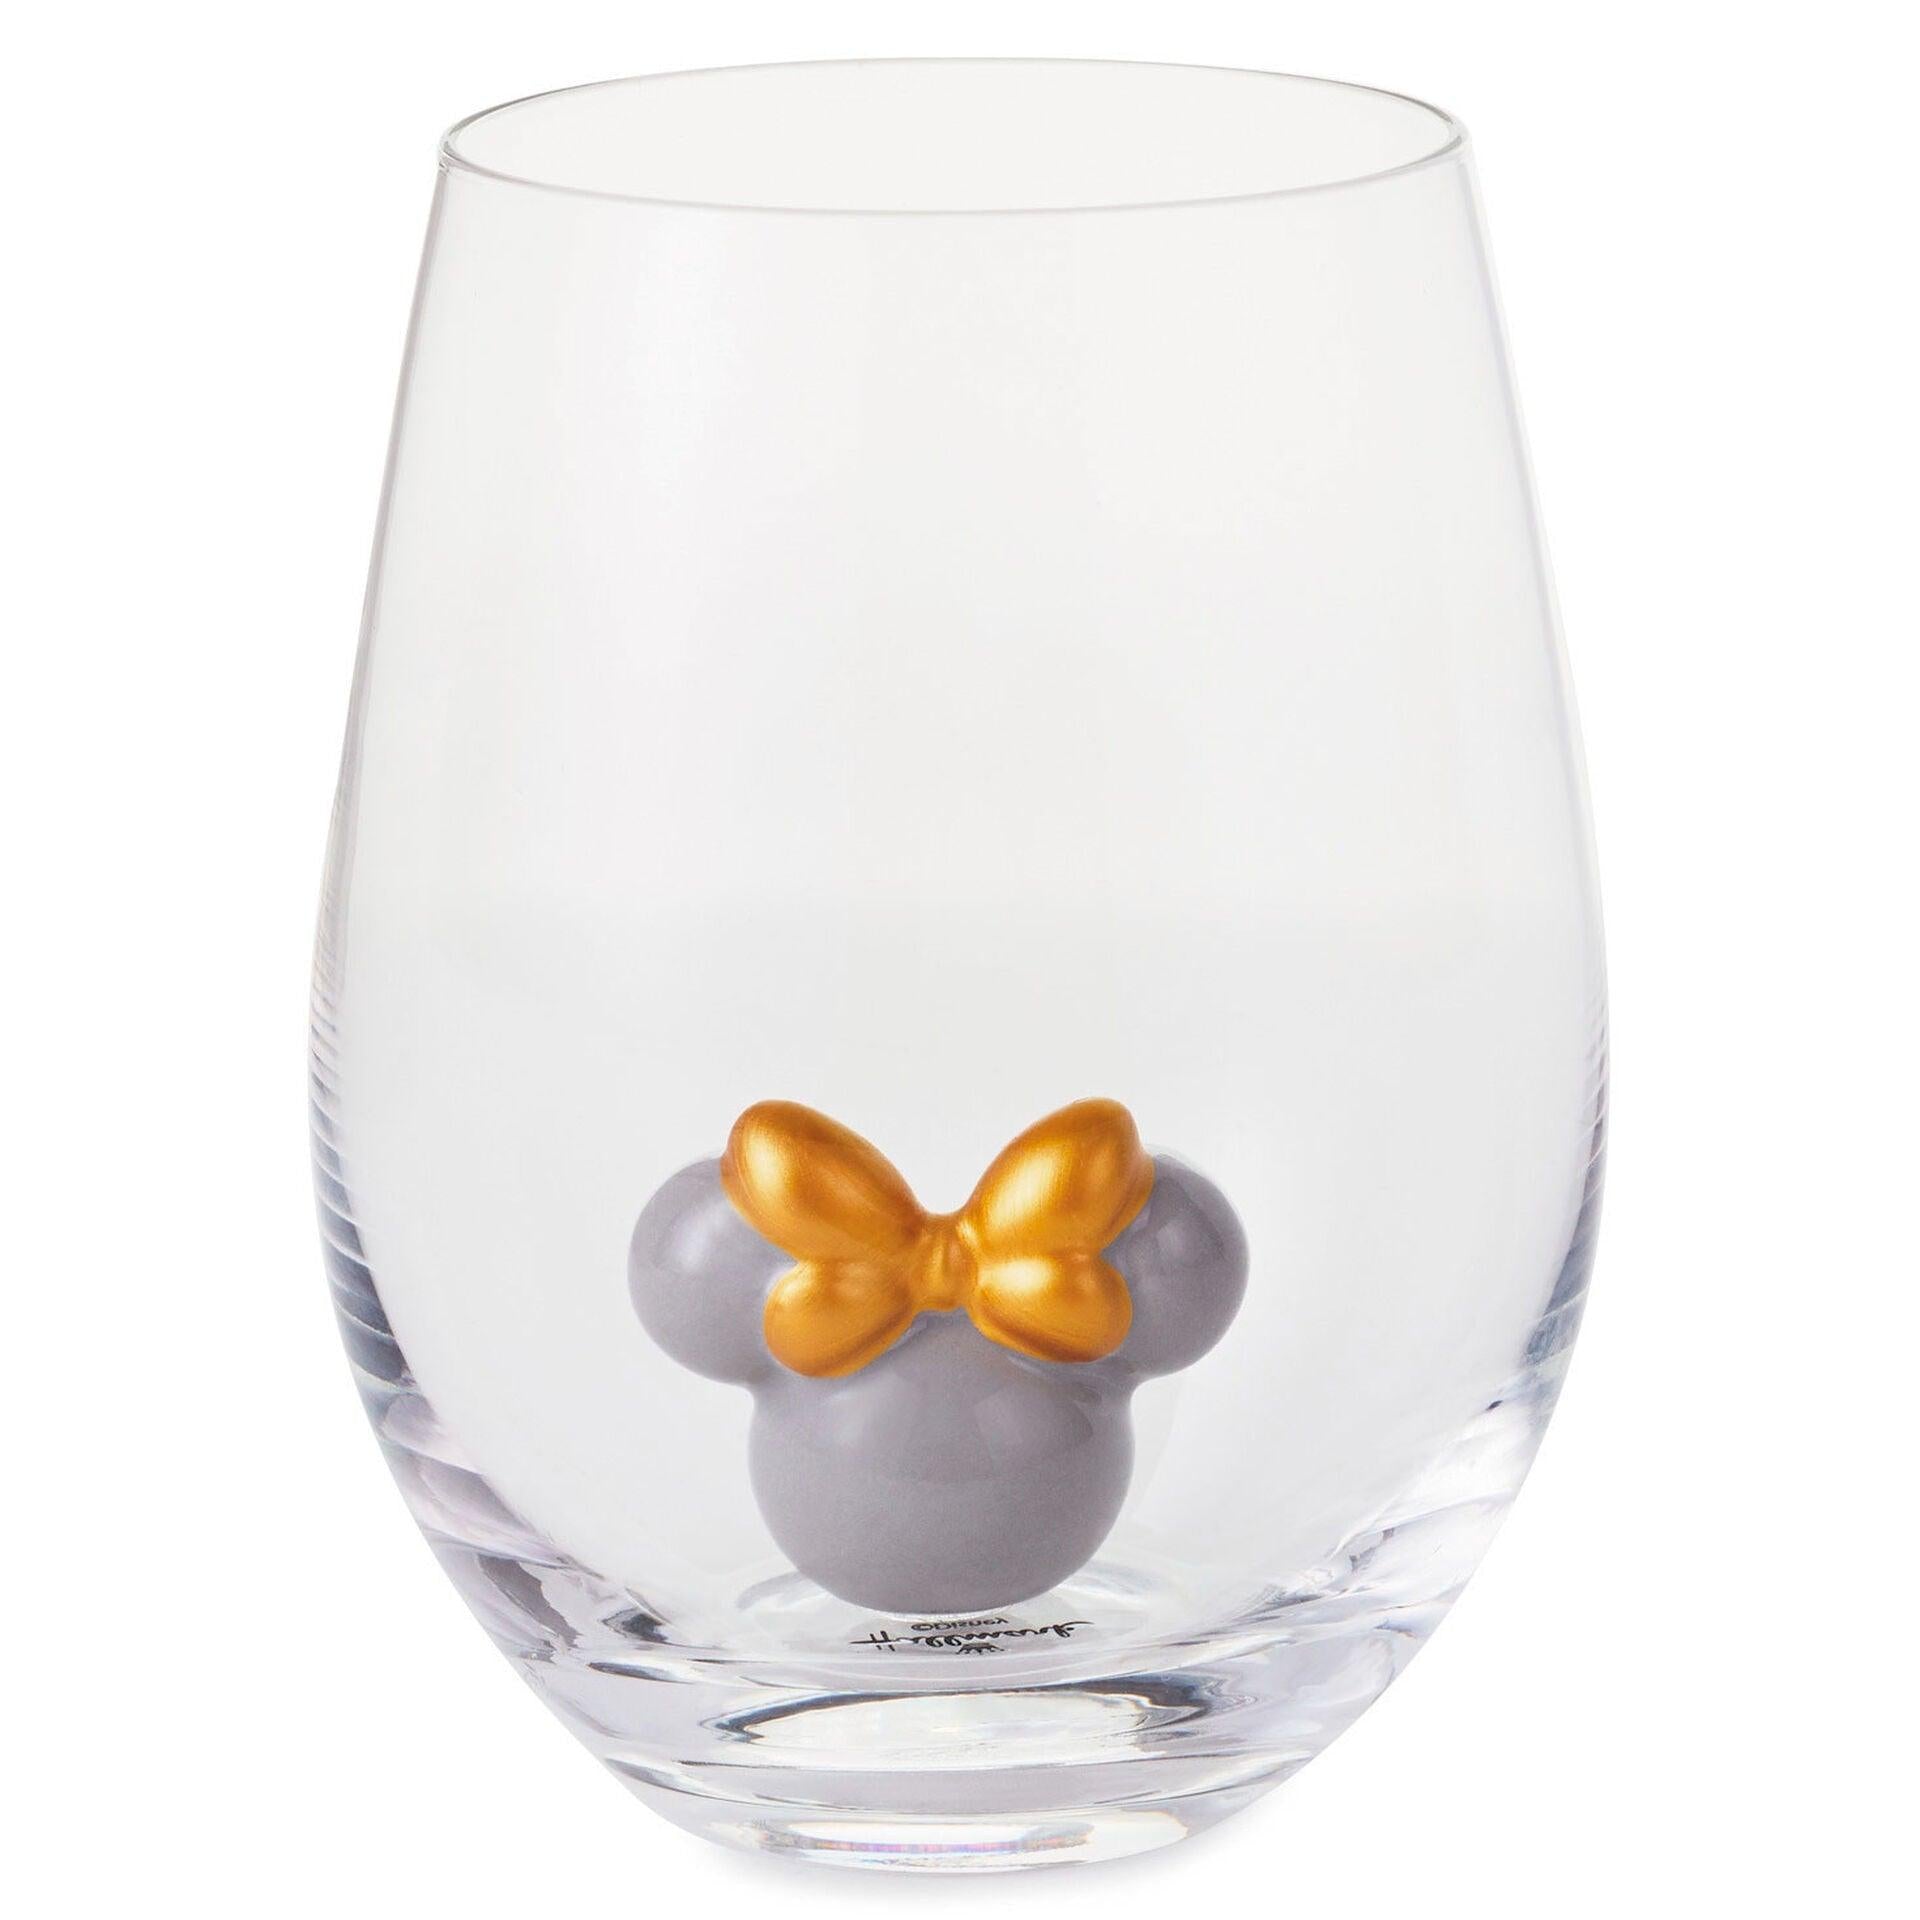 Disney Lilo & Stitch Stemless Wine Glass